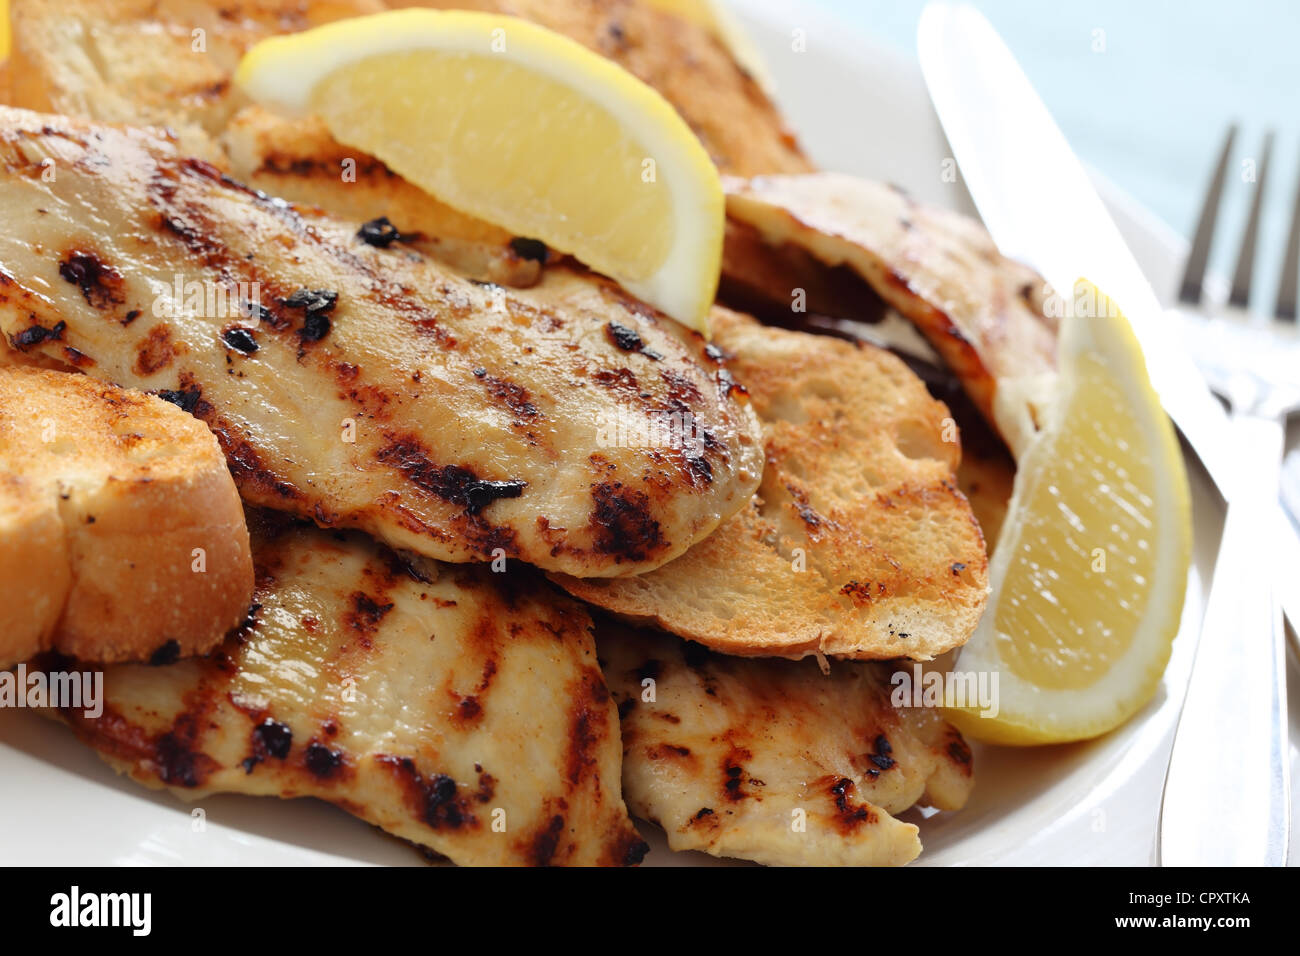 Grilled lemon chicken with garlic bread,Closeup. Stock Photo